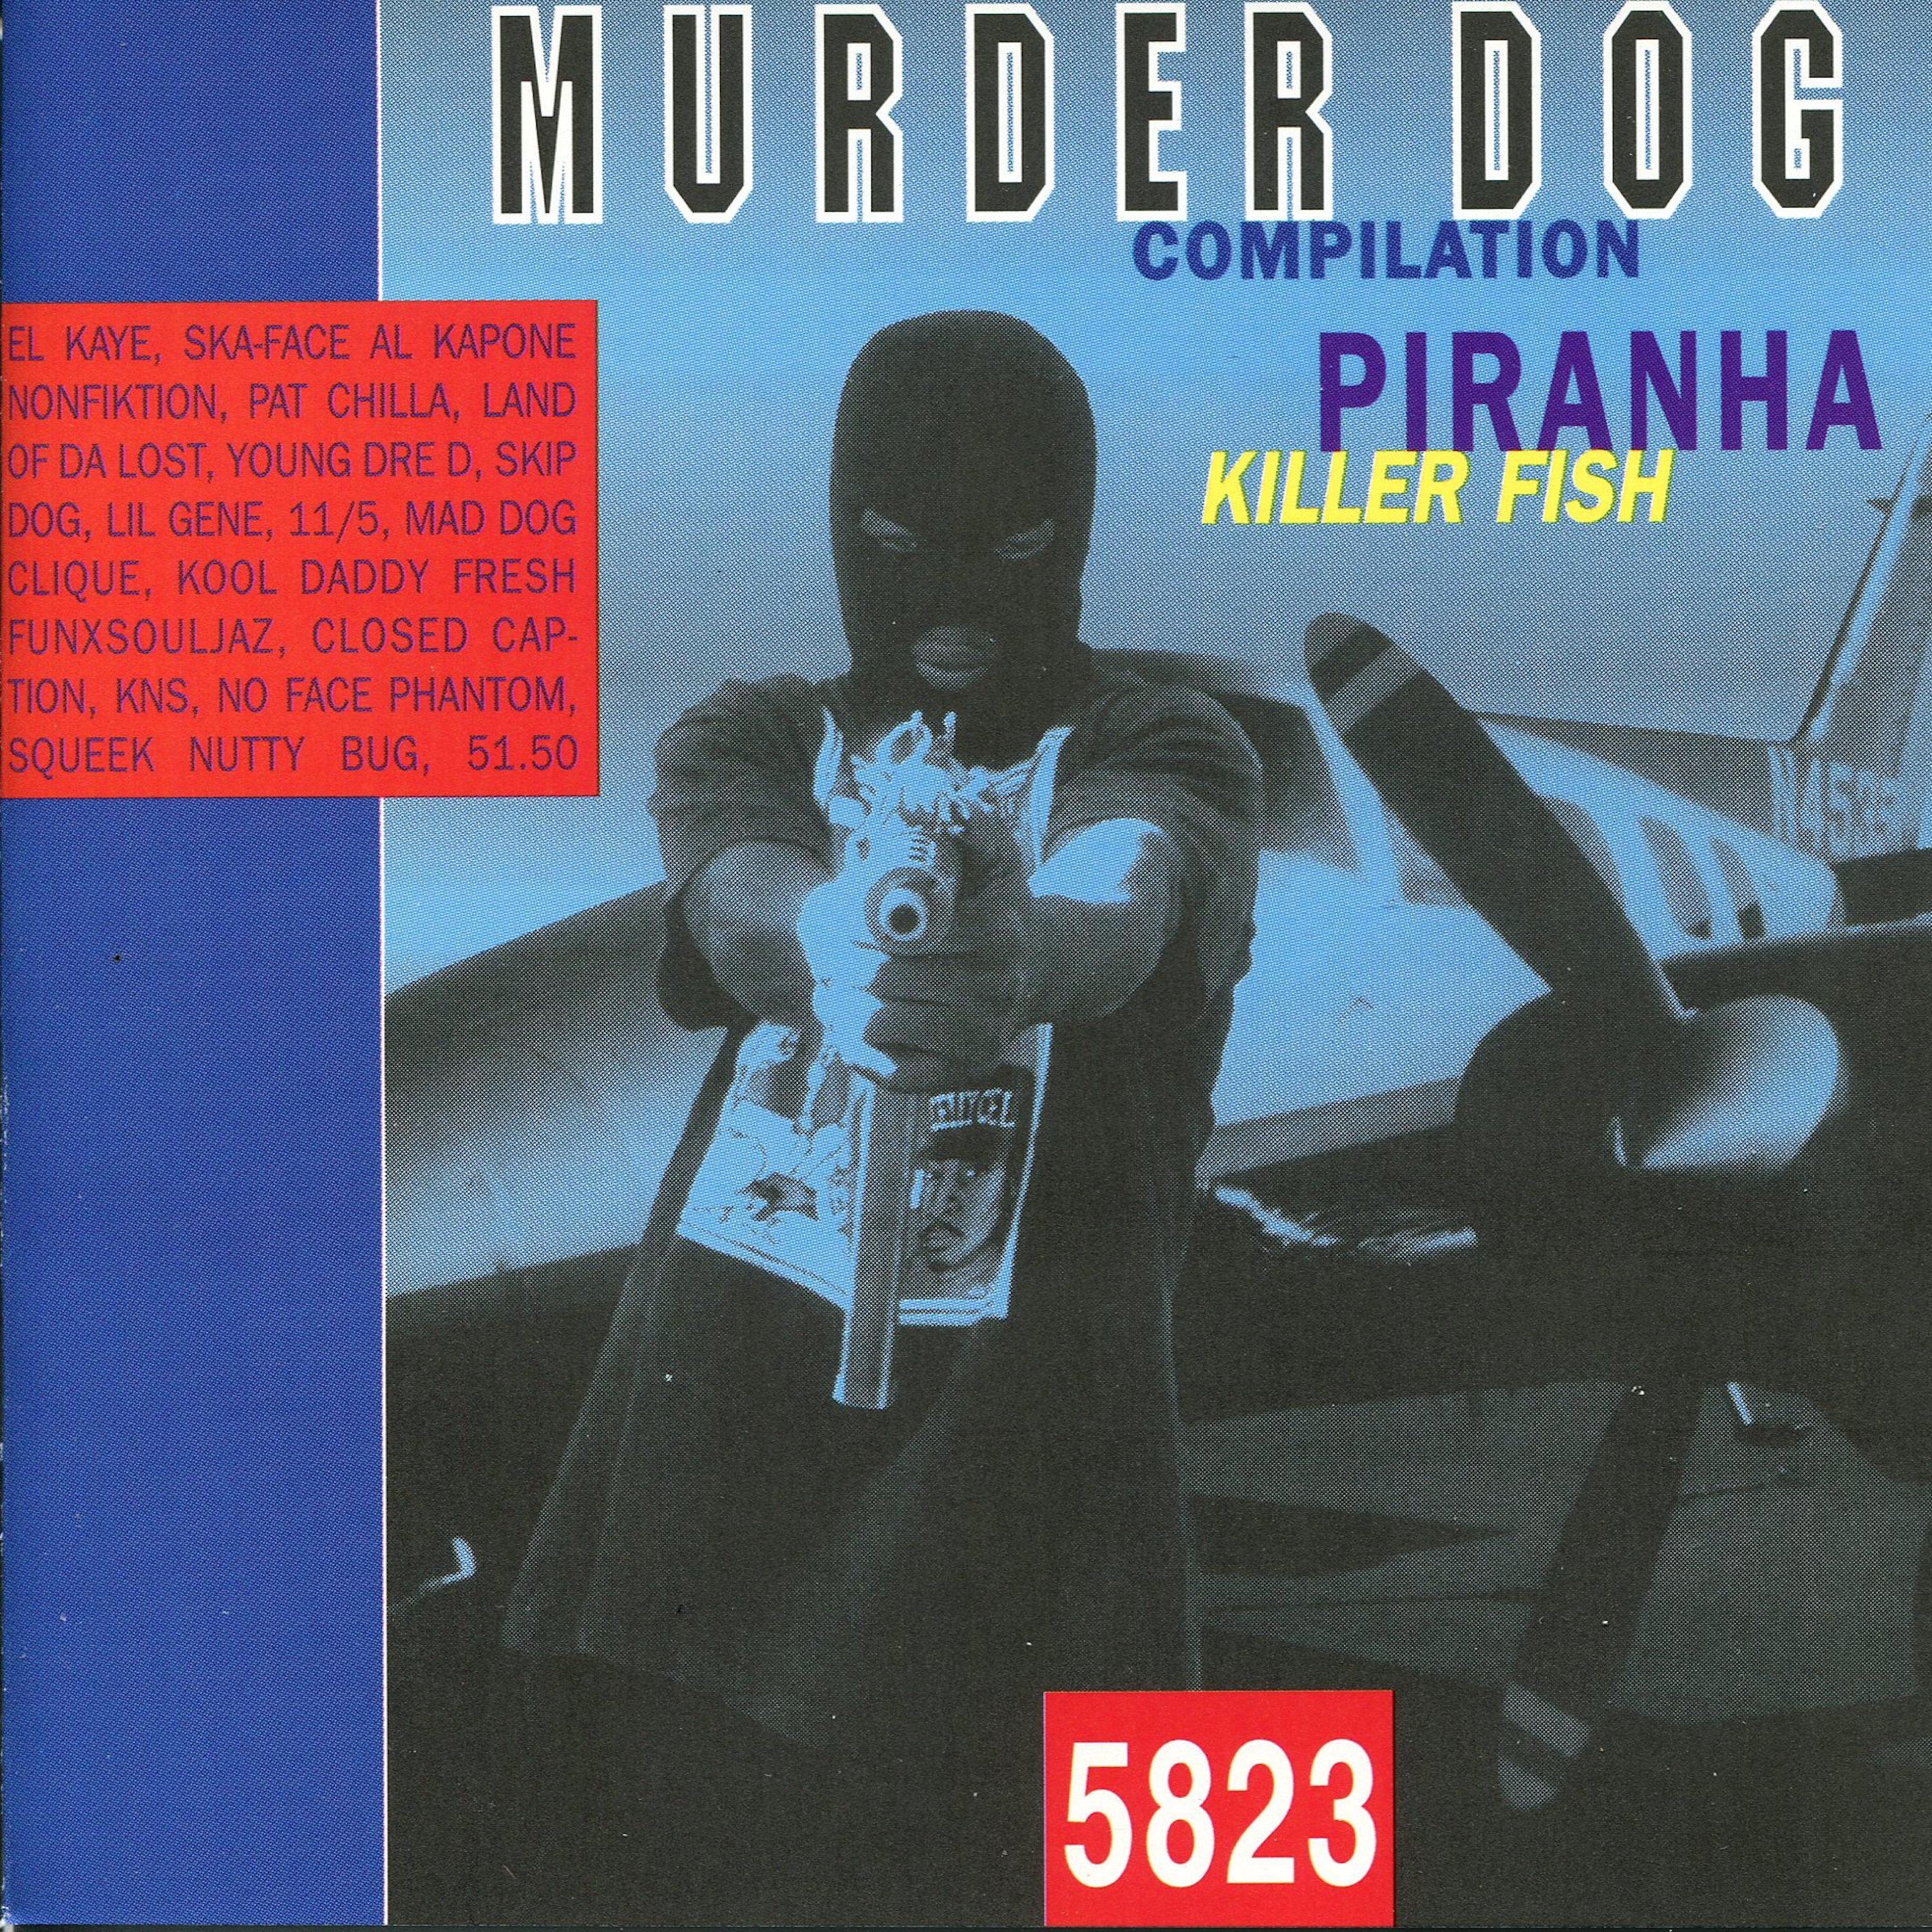 Murder Dog Compilation - Piranha Killer Fish 5823